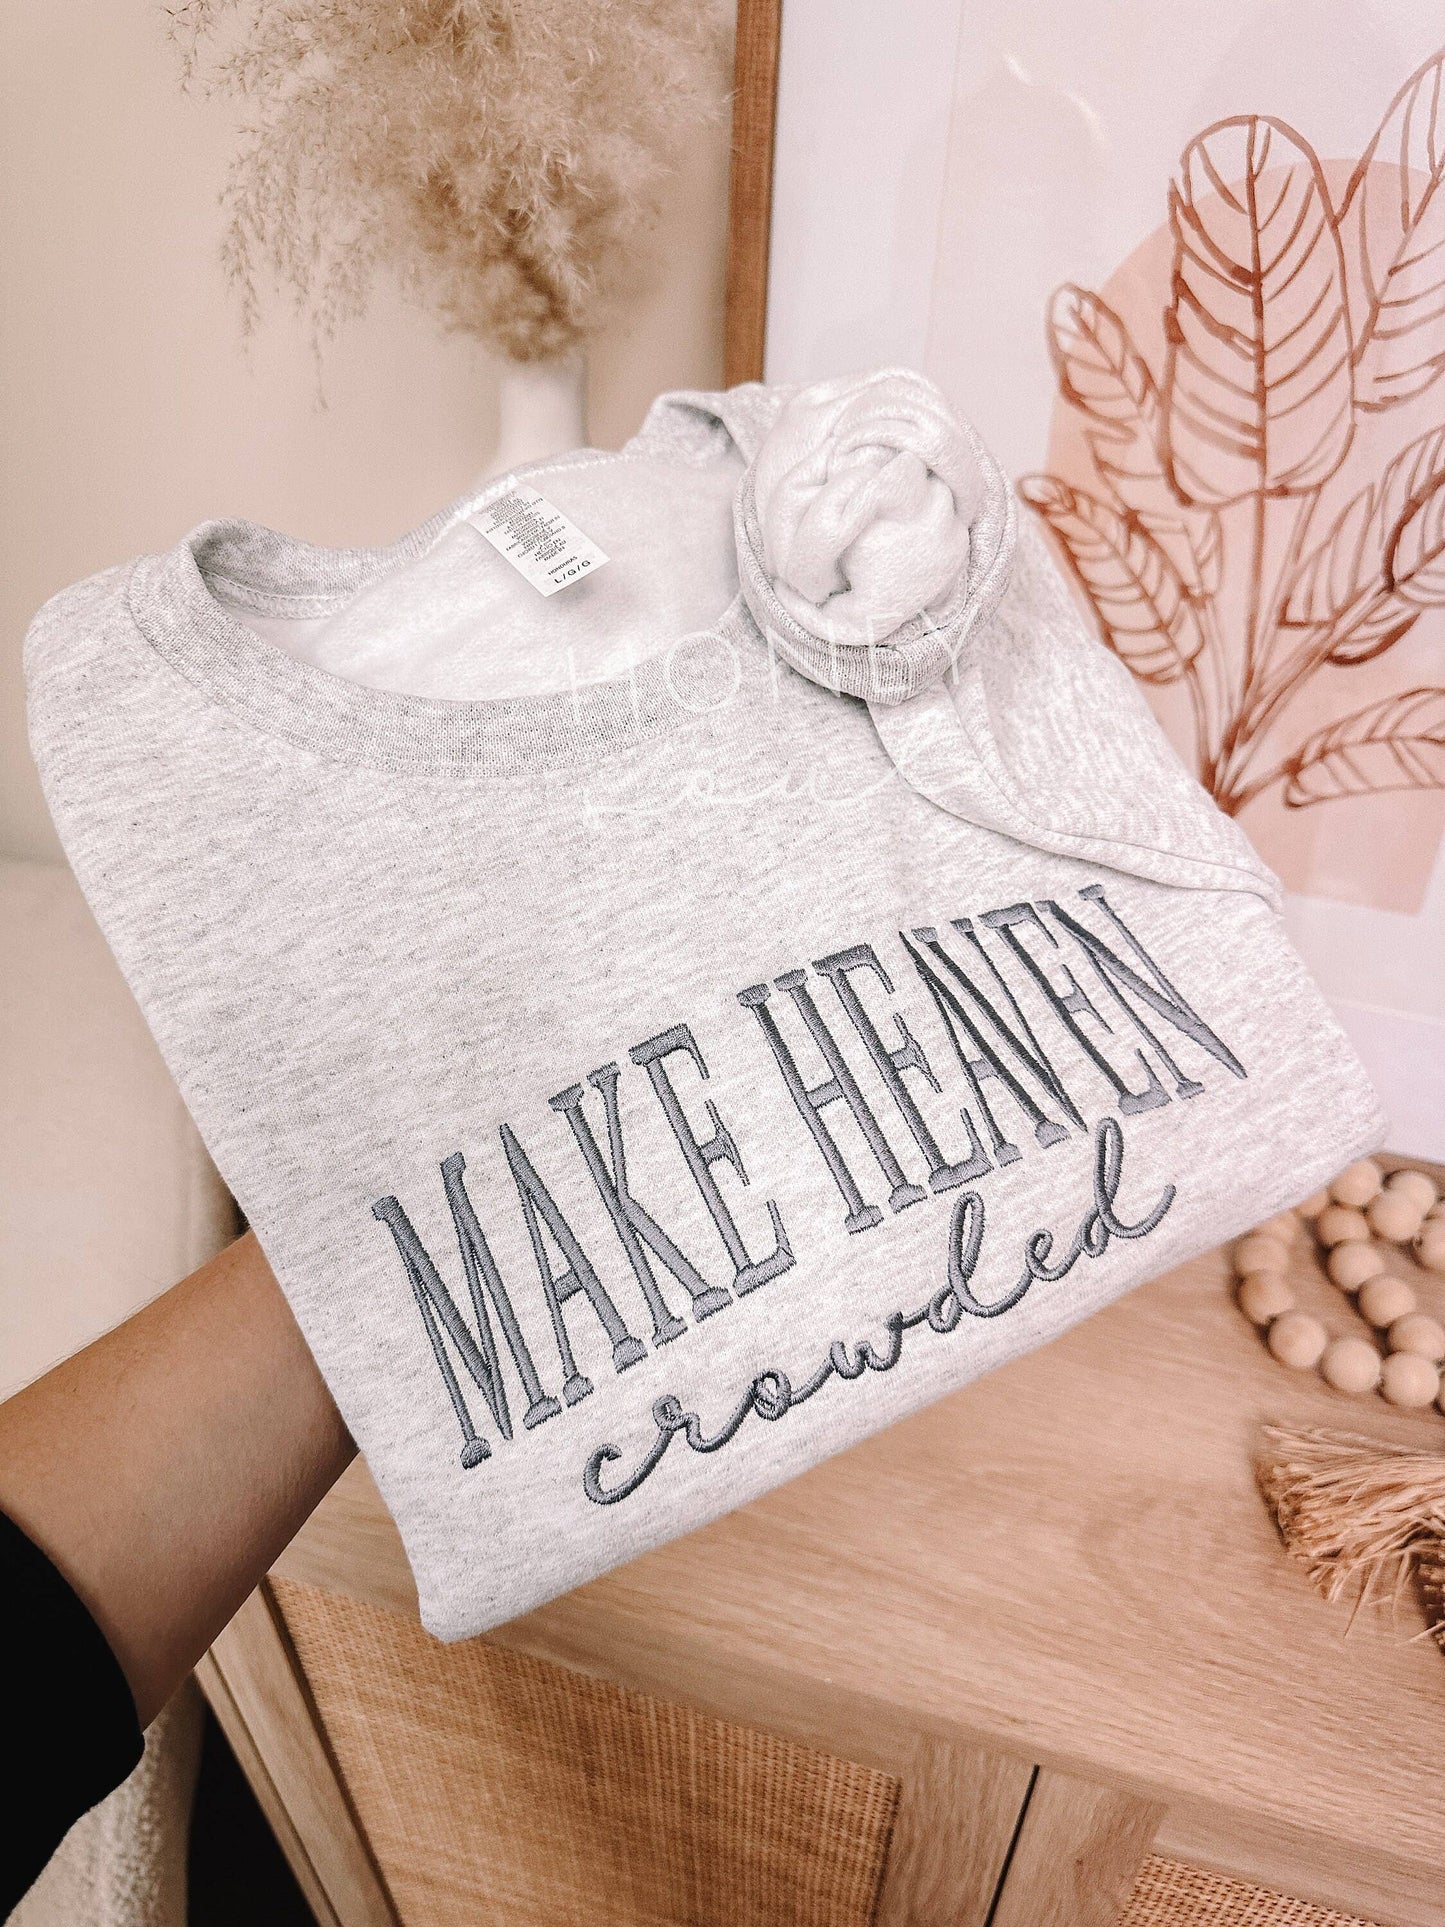 Embroidered Make Heaven Crowded Ash Sweatshirt